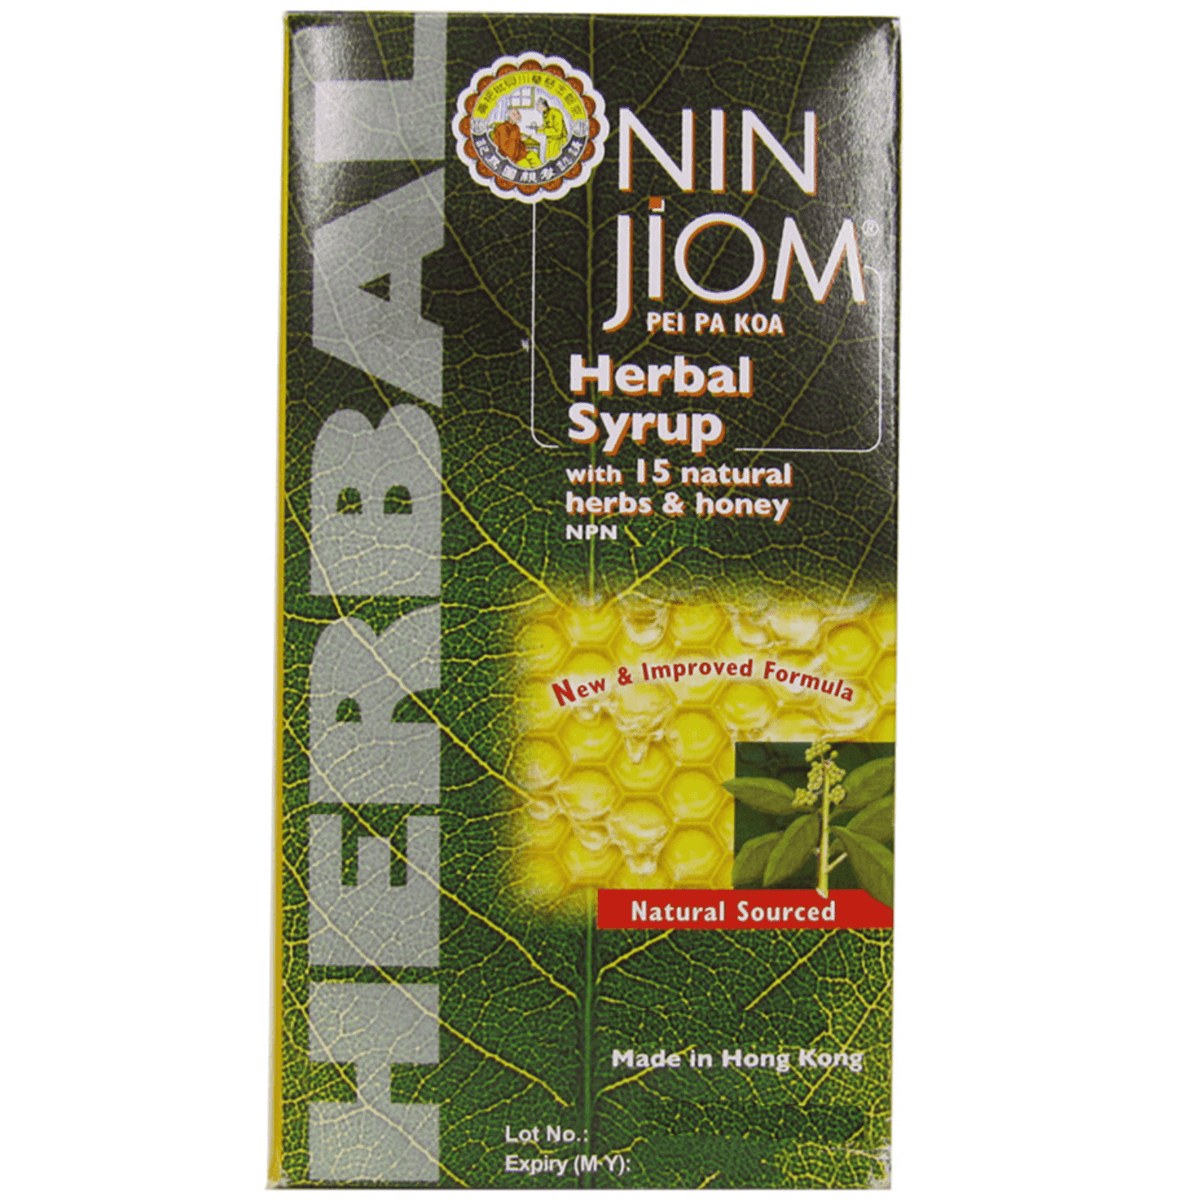 Nin Jiom Pei Pa Koa Herbal Cough & Throat Syrup 300ML Cough, Cold & Flu at Village Vitamin Store